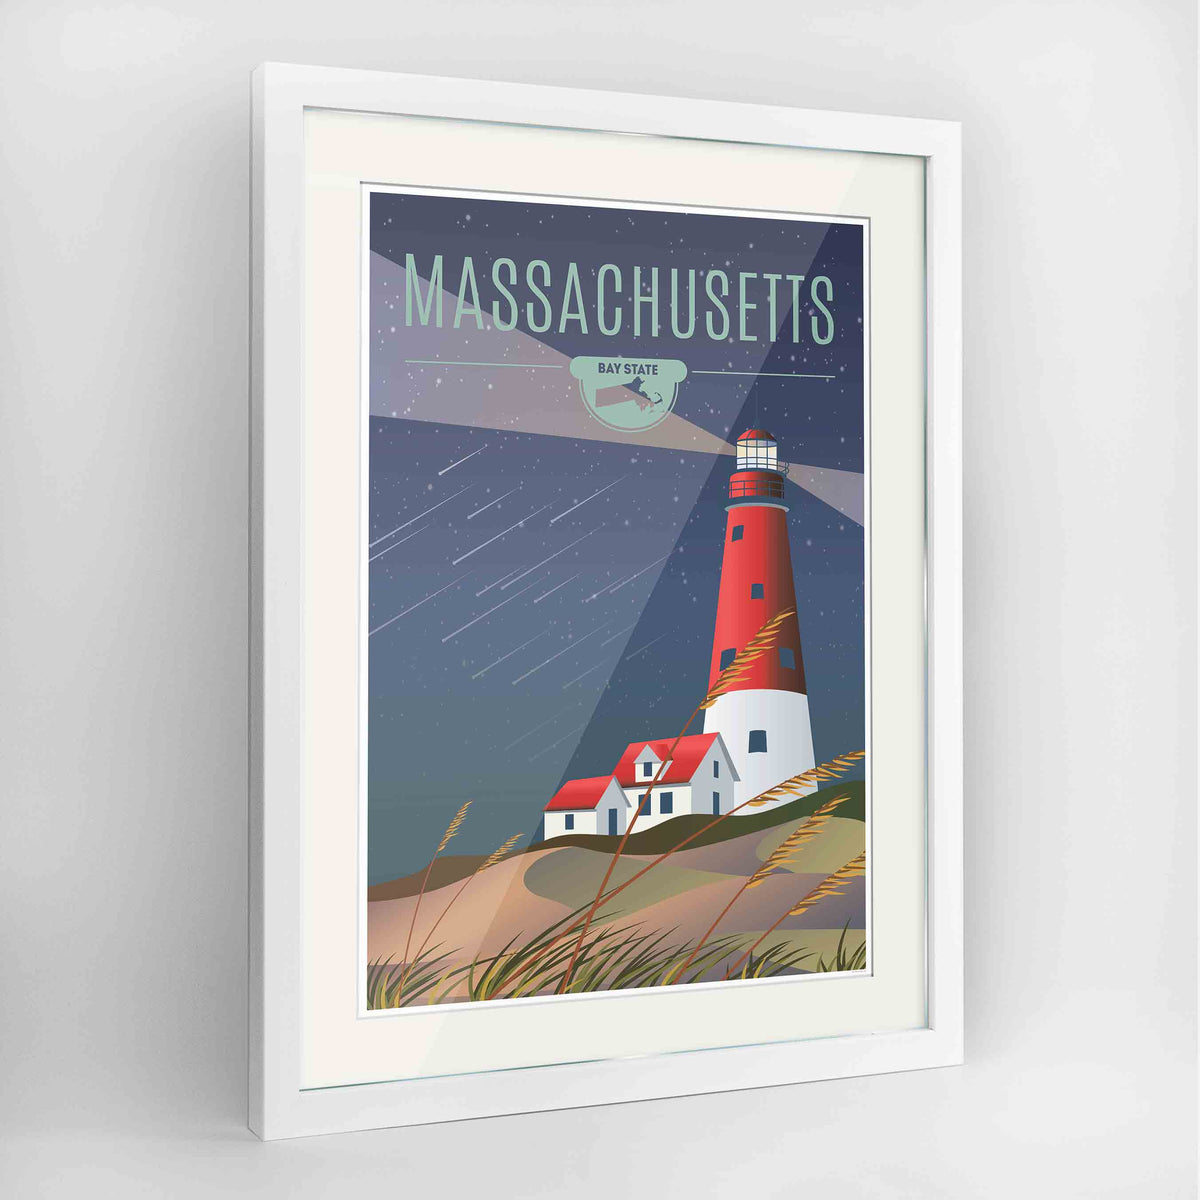 Massachusetts State Frame Print